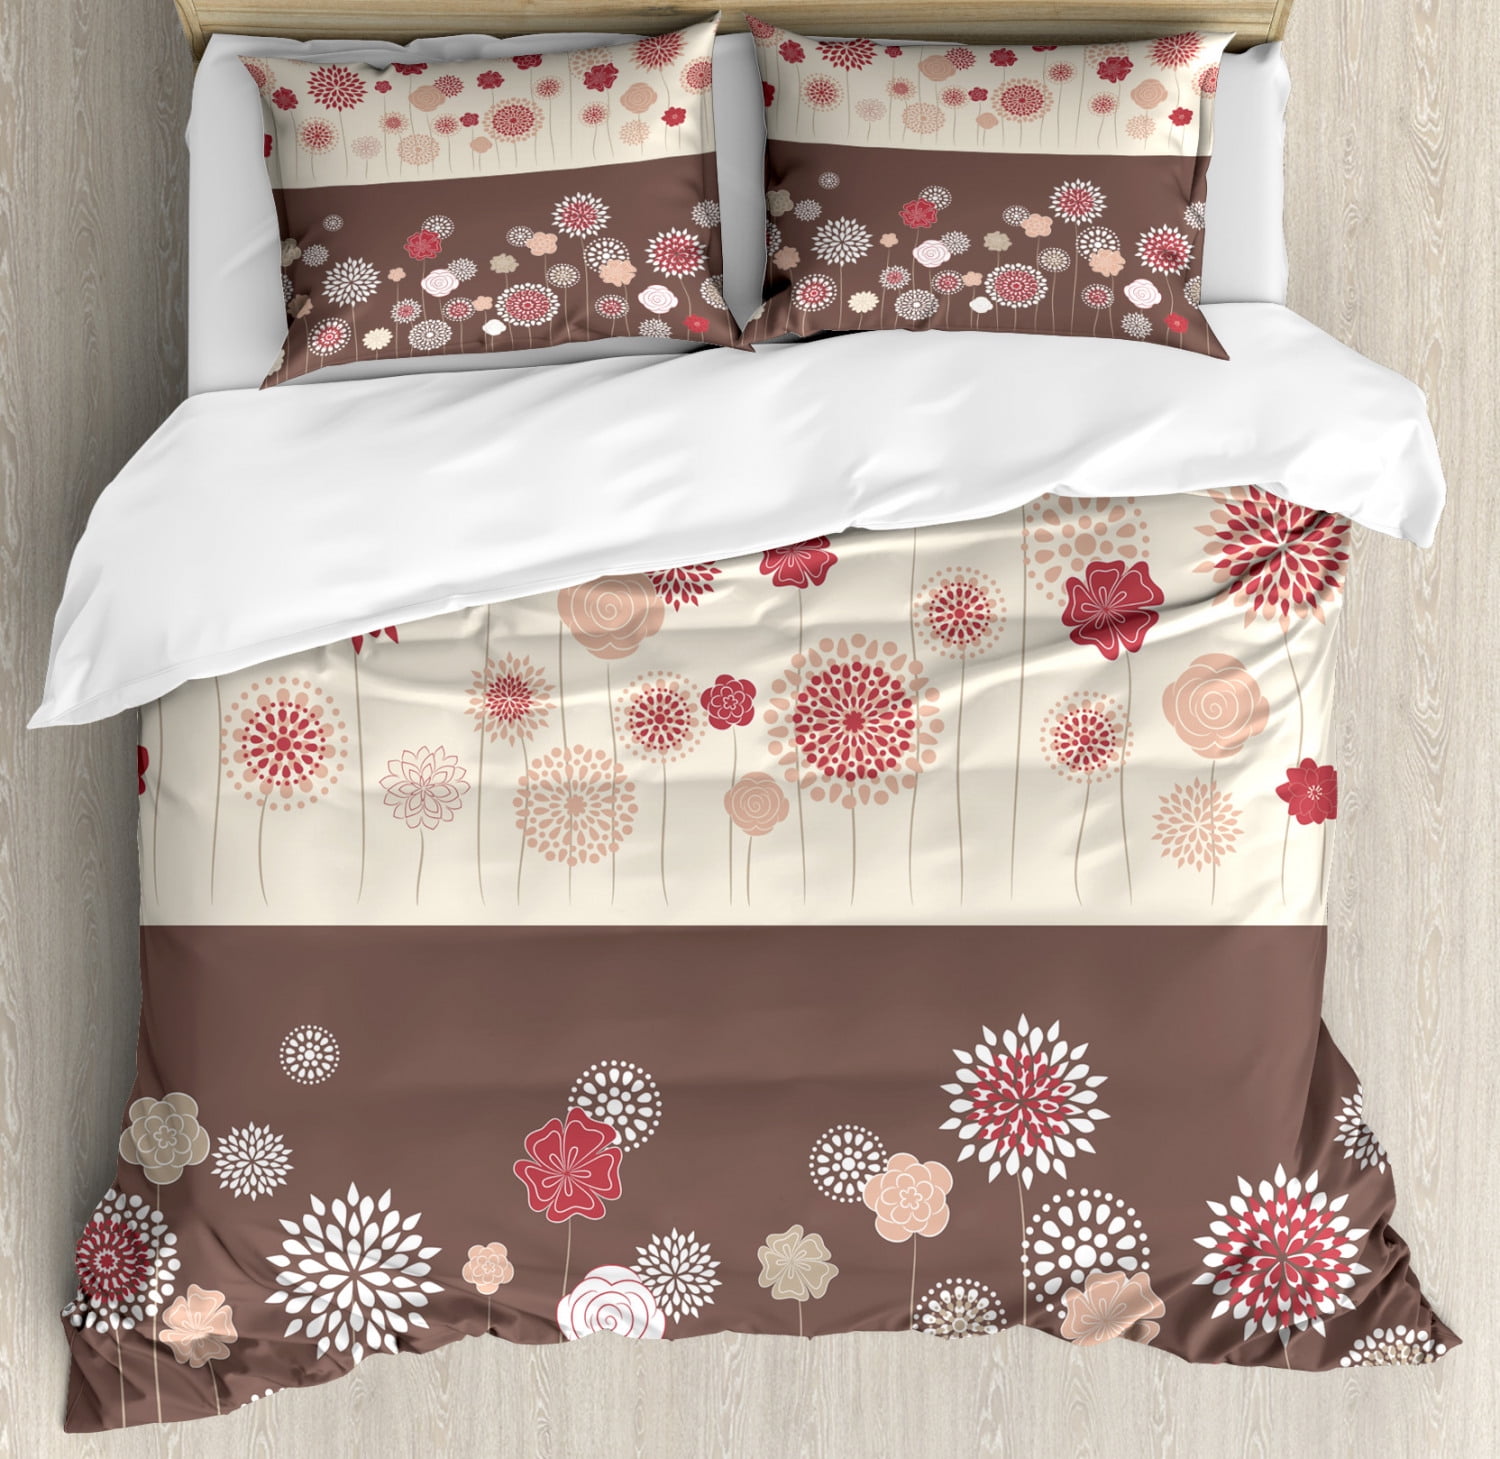 SPRING MEADOW Painted Floral Duvet Quilt Cover Pillow Case Bedding Set 